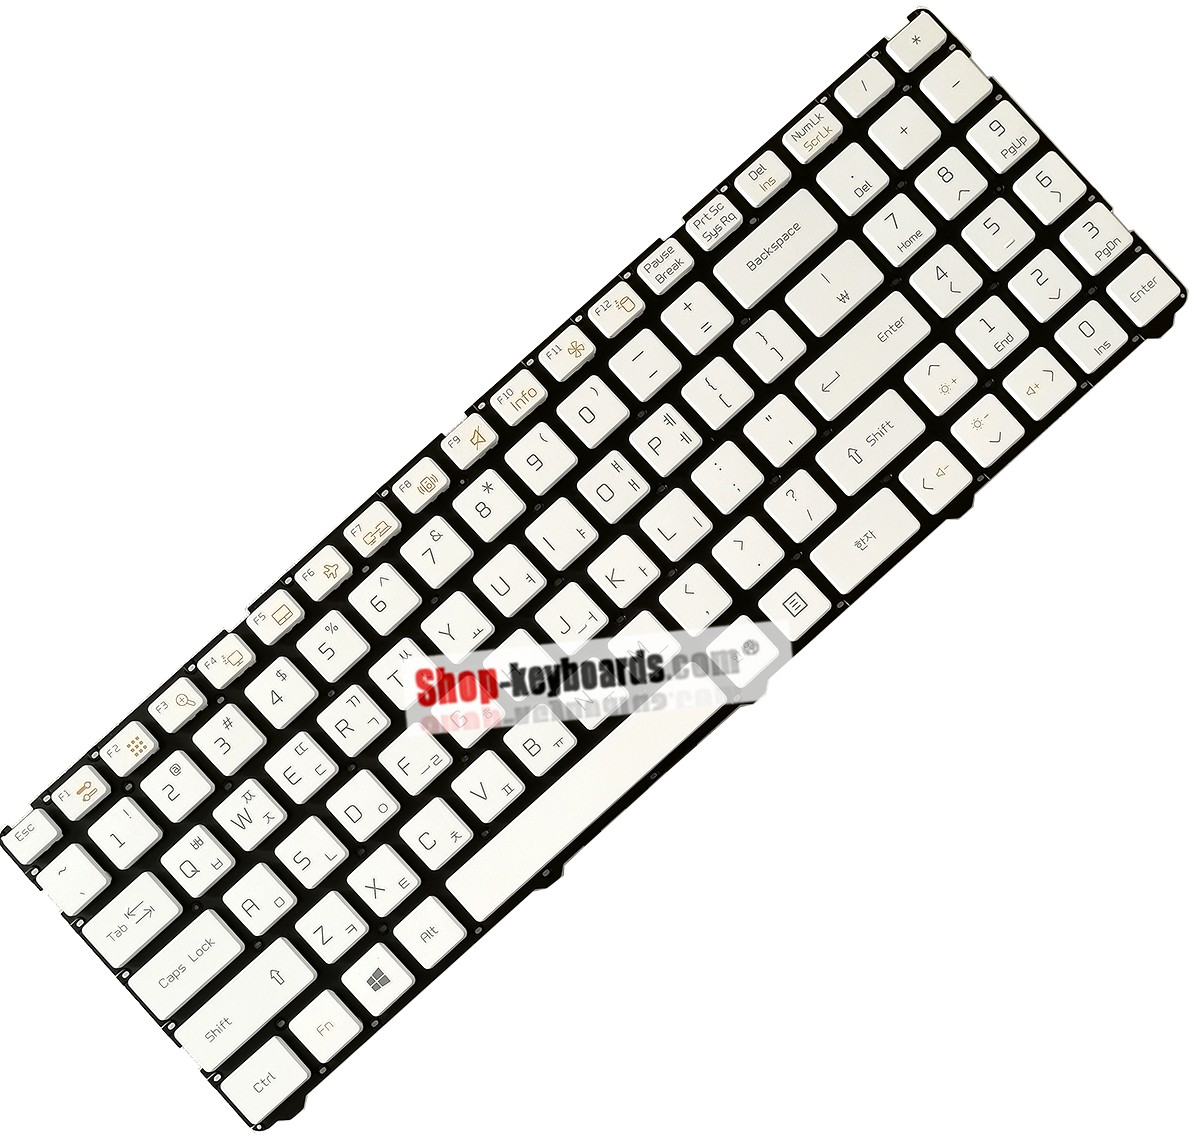 LG AELG9E00010 Keyboard replacement